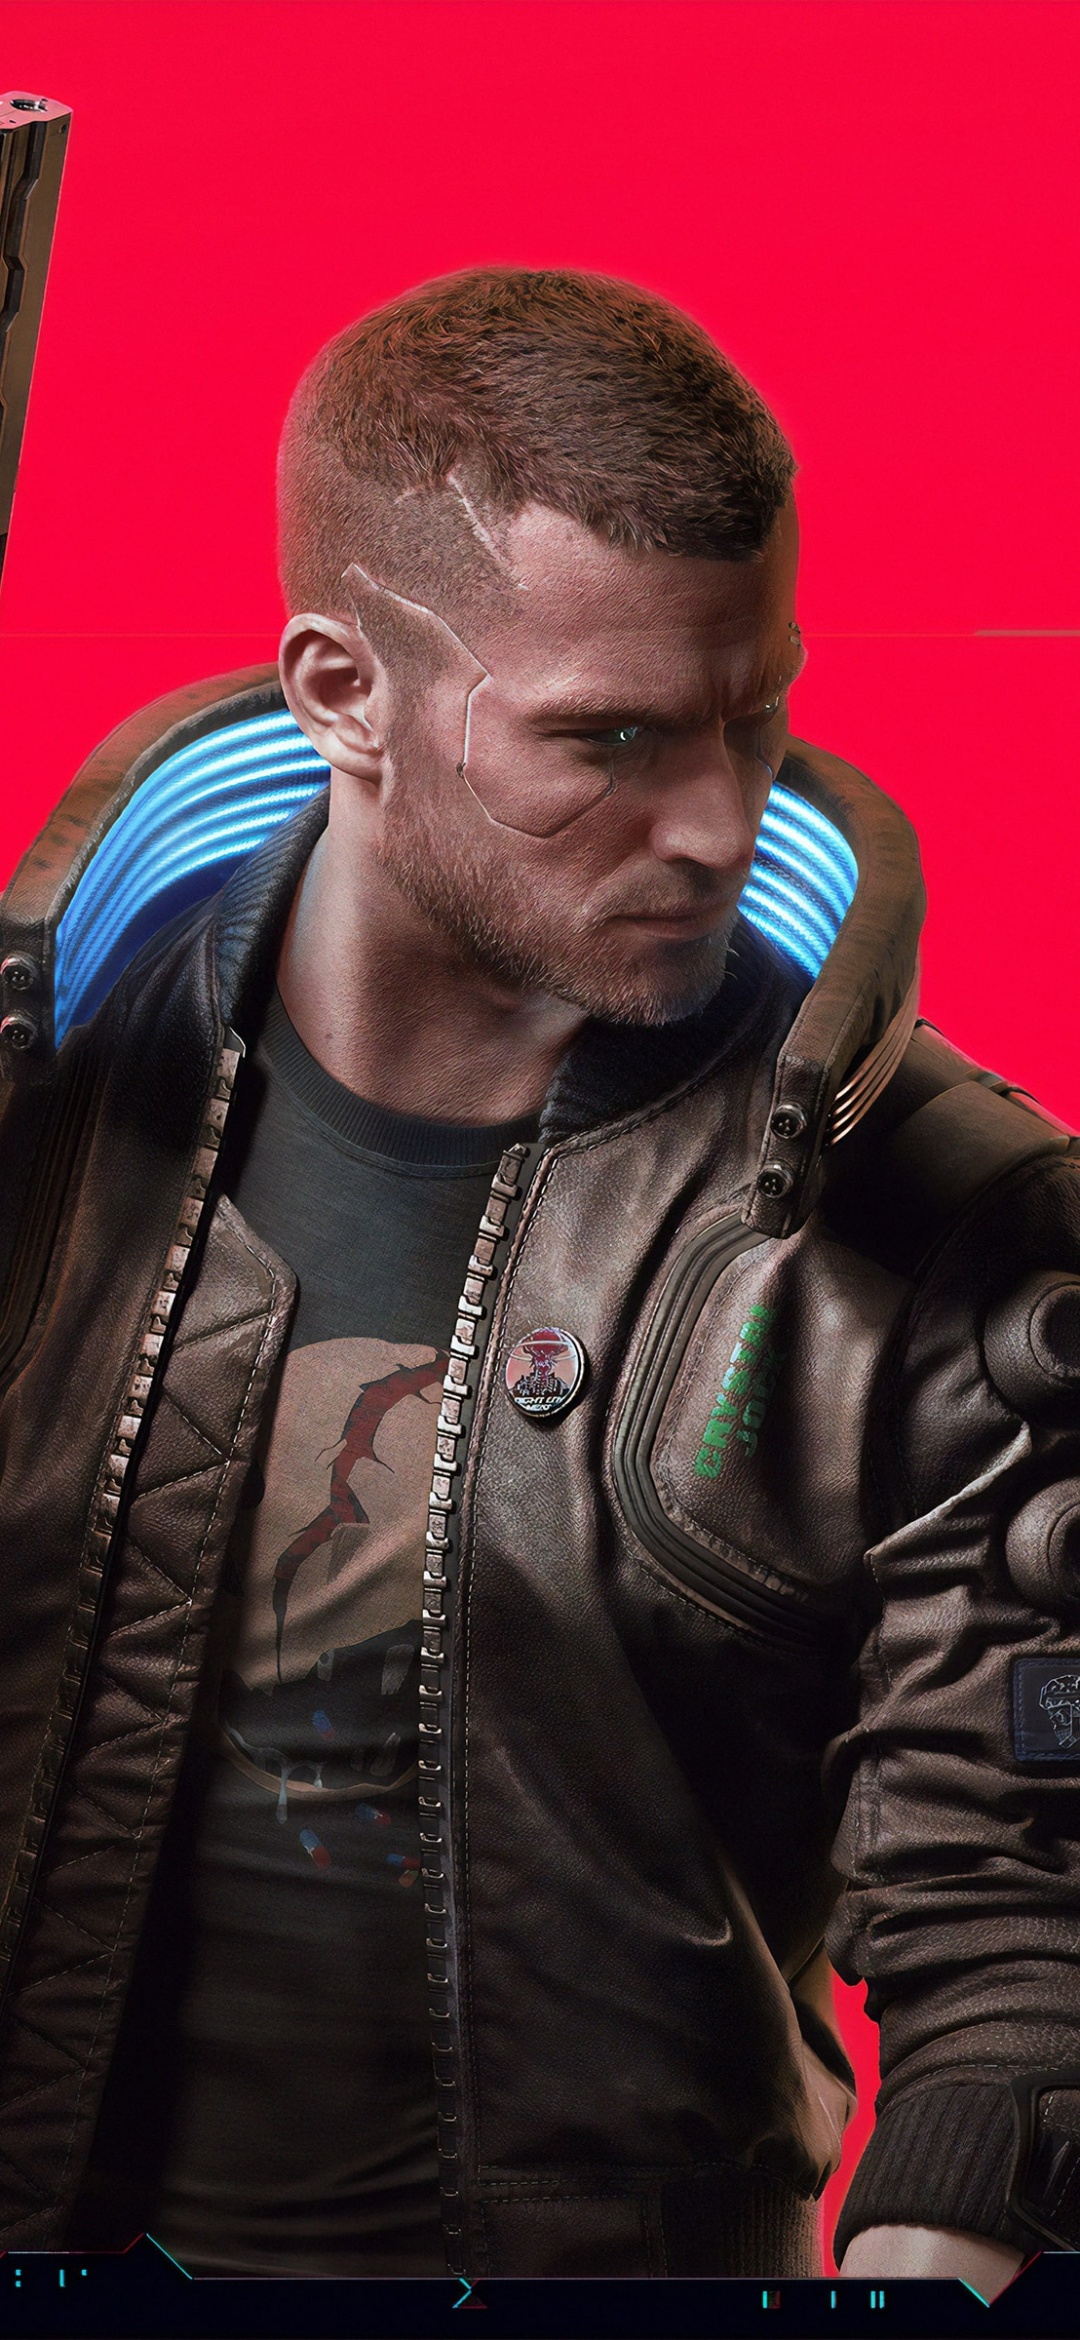 cyberpunk 2077 4k wallpaper, character v, red background